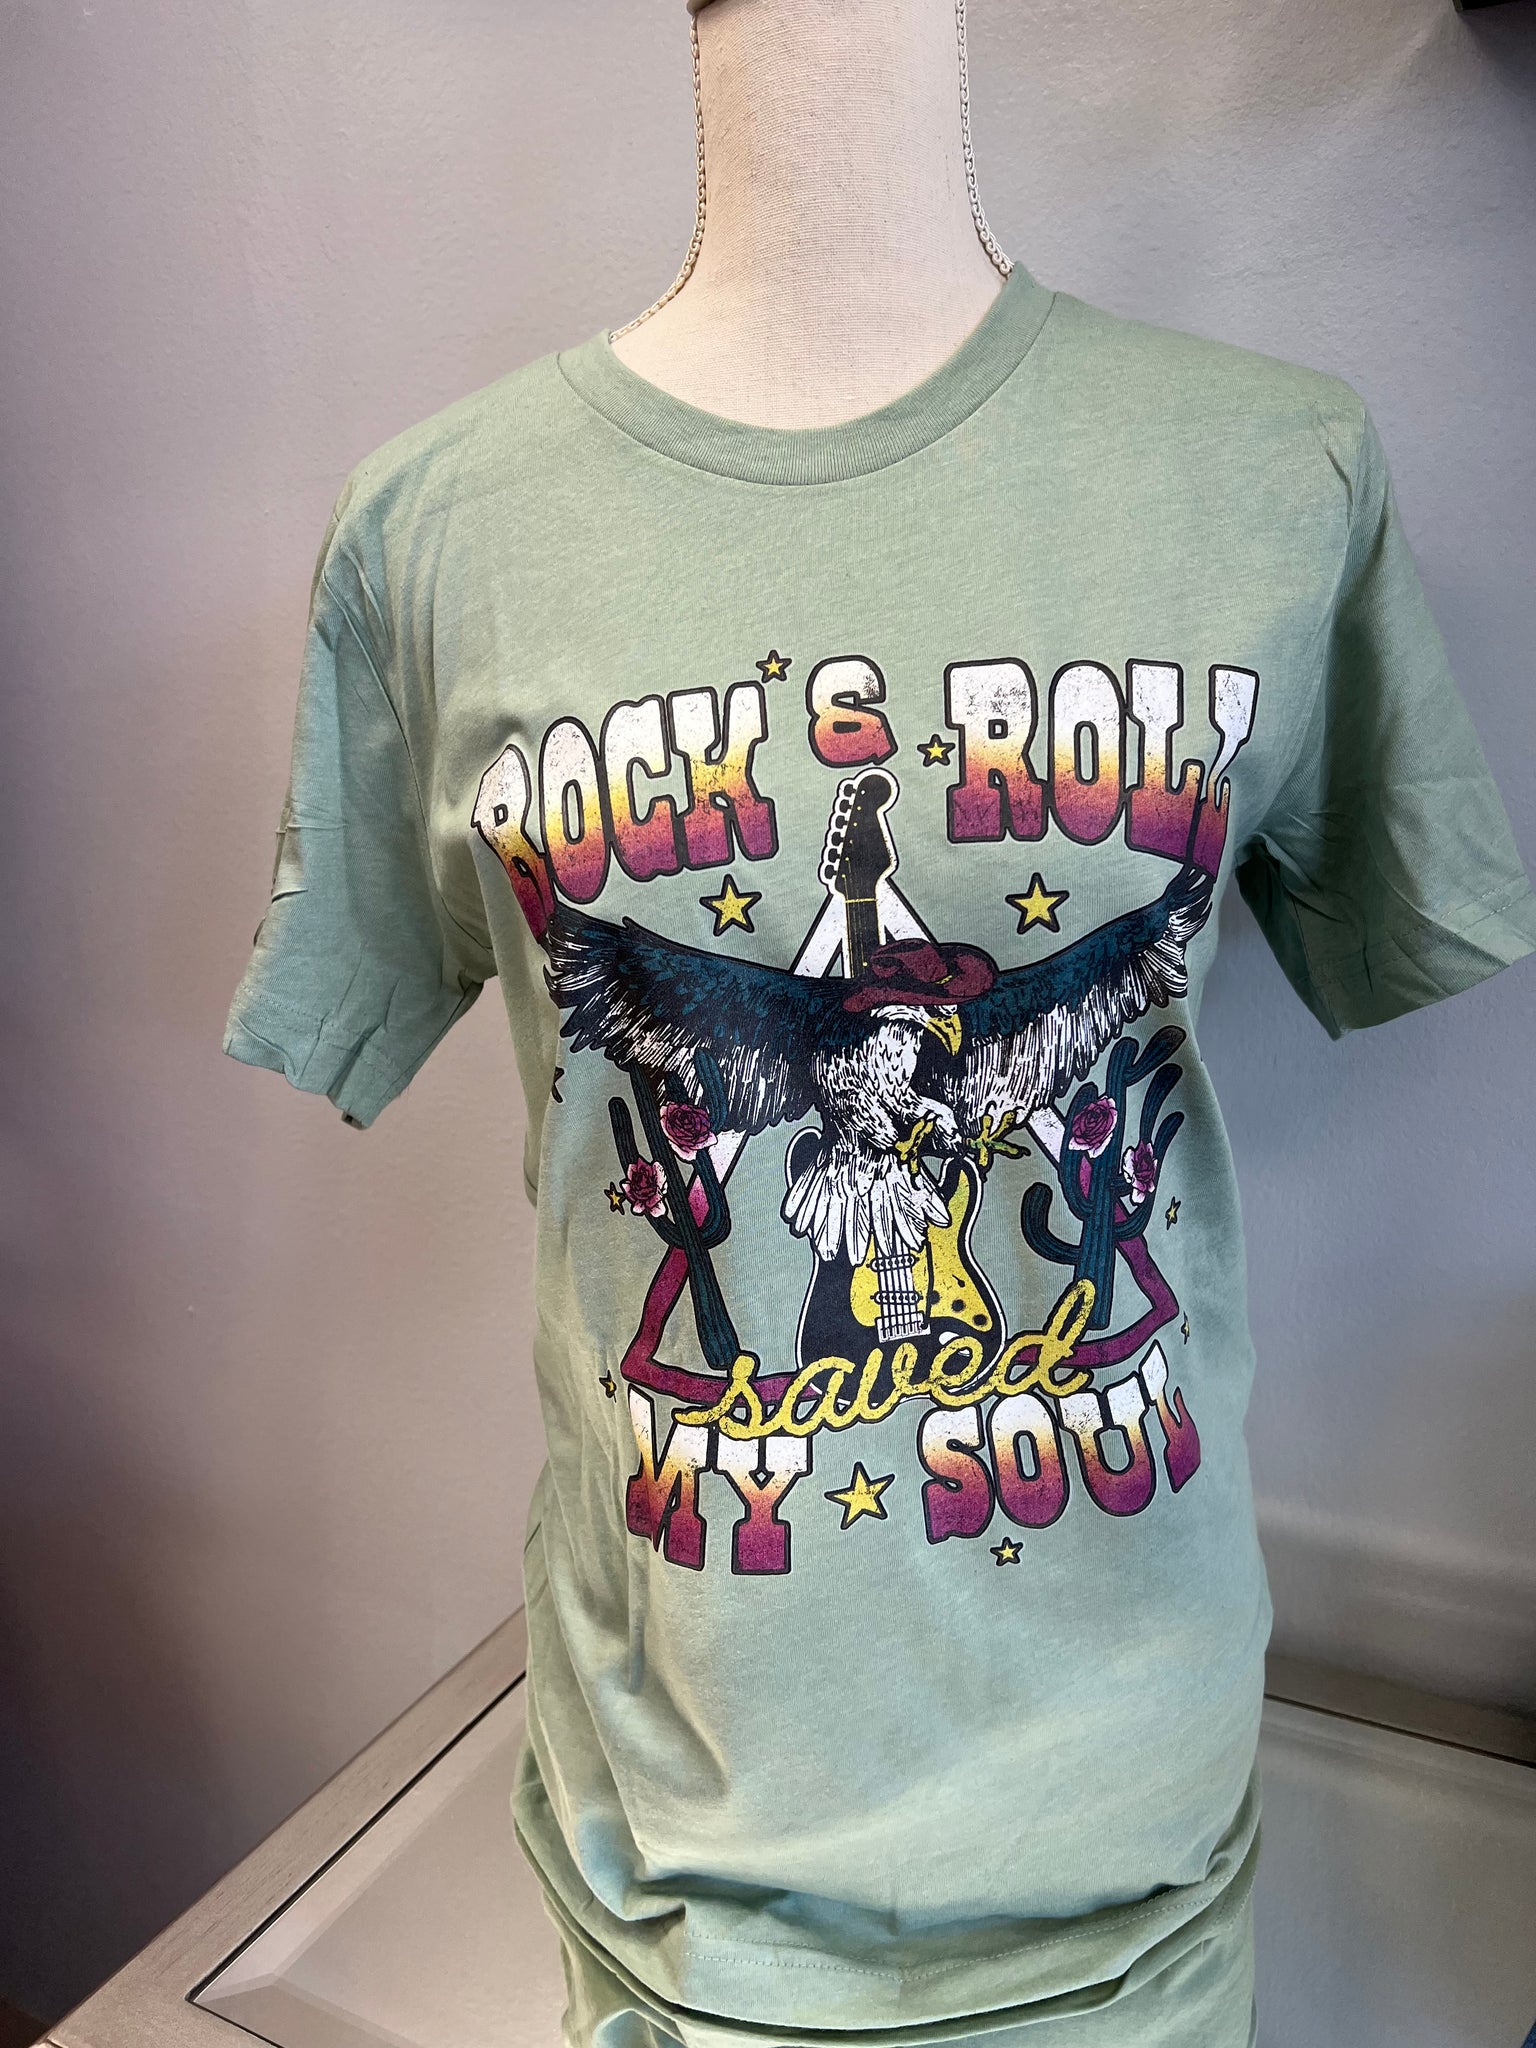 Regular & Curvy Sage “Rock & Roll Saved My Soul” Graphic Tees Tshirts